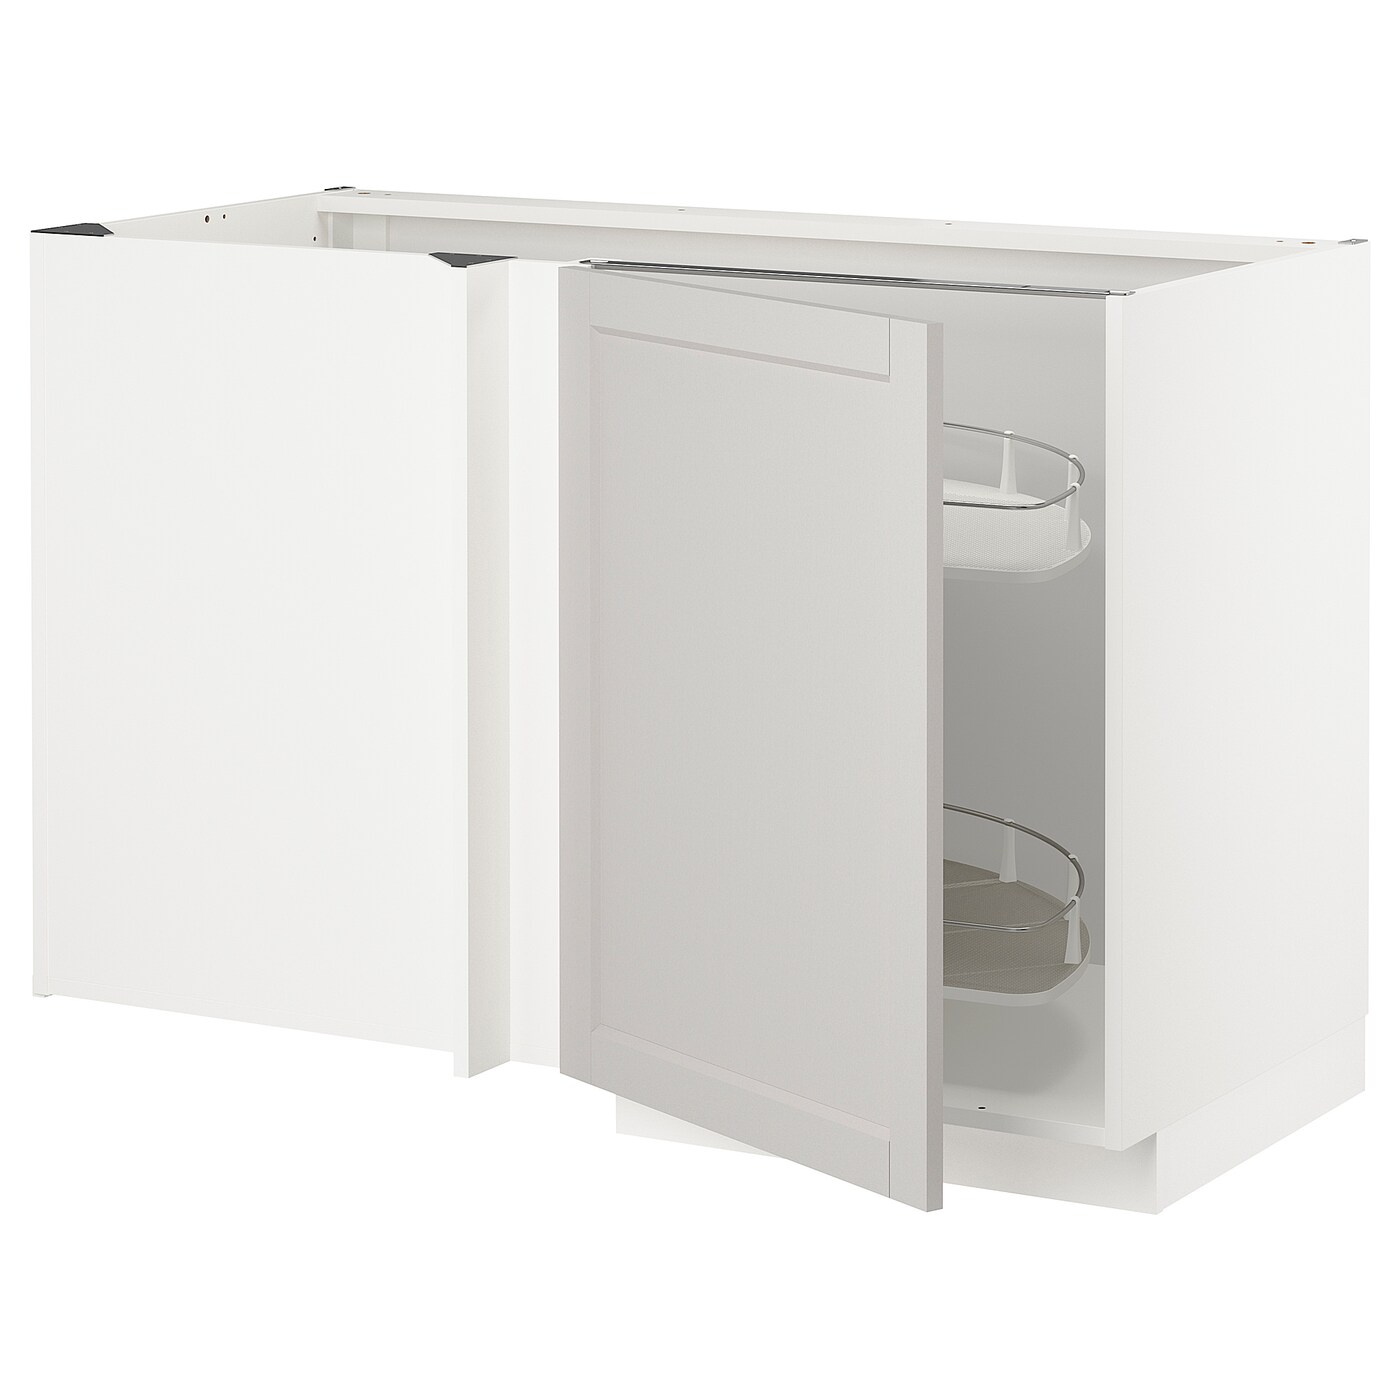 Напольный шкаф - METOD IKEA/ МЕТОД ИКЕА,  127,5х88 см, белый/светло-серый